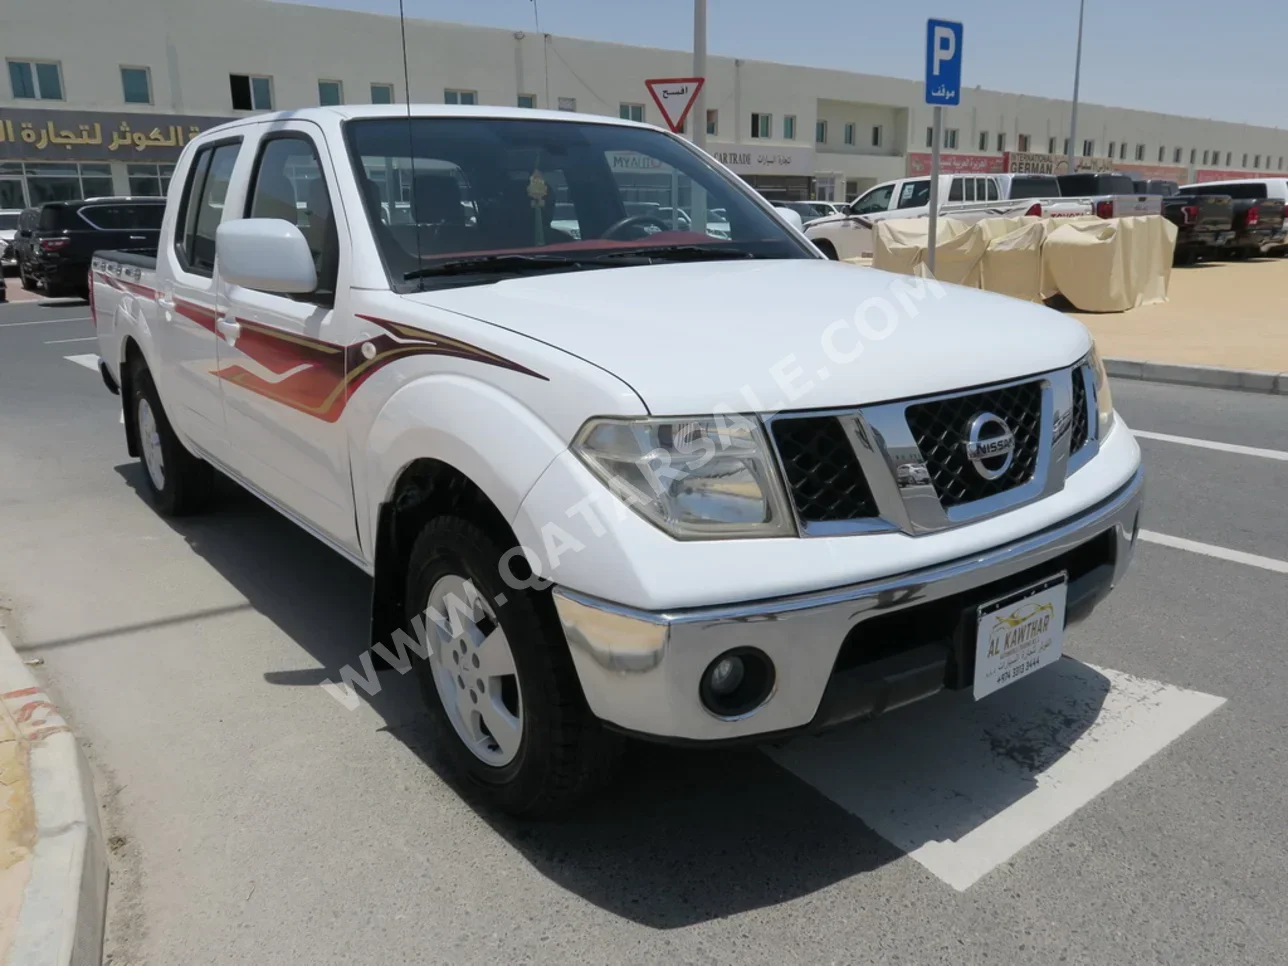 Nissan  Navara  2016  Automatic  202,000 Km  4 Cylinder  Rear Wheel Drive (RWD)  Pick Up  White